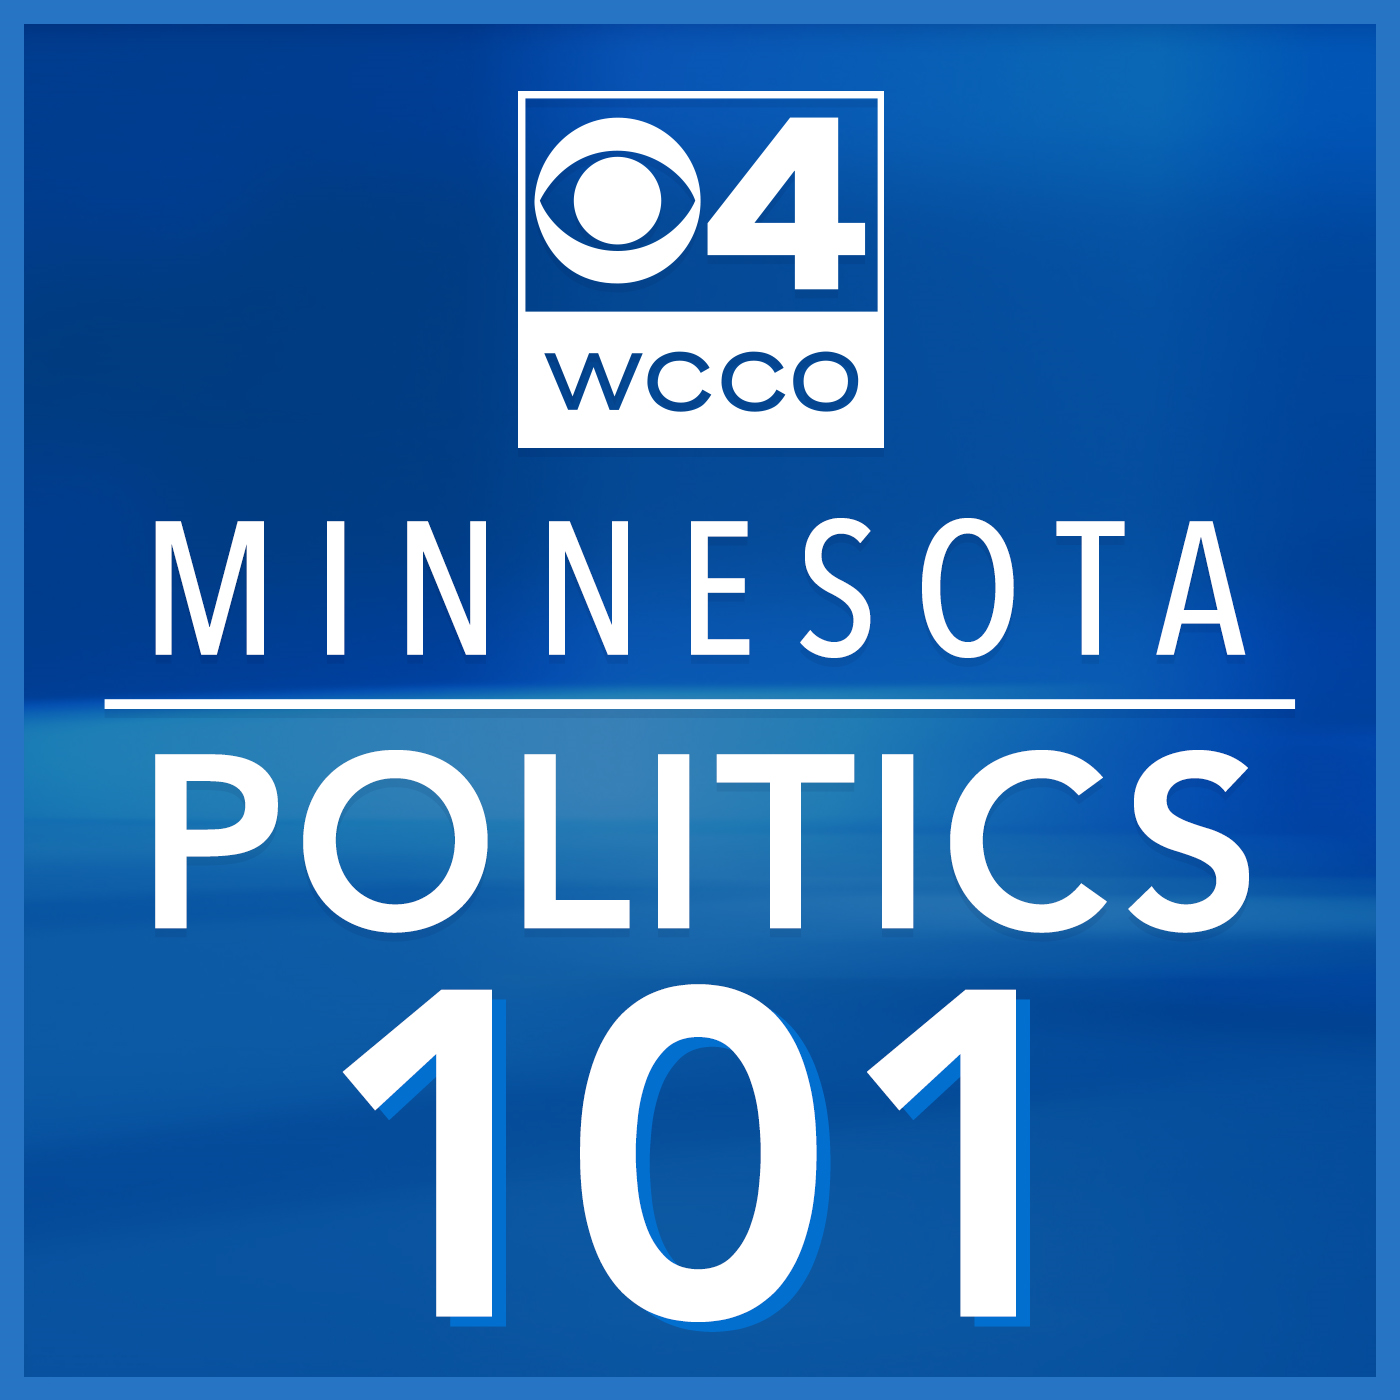 #TWITTERNEWS - Minnesota Politics 101 with Pat Kessler